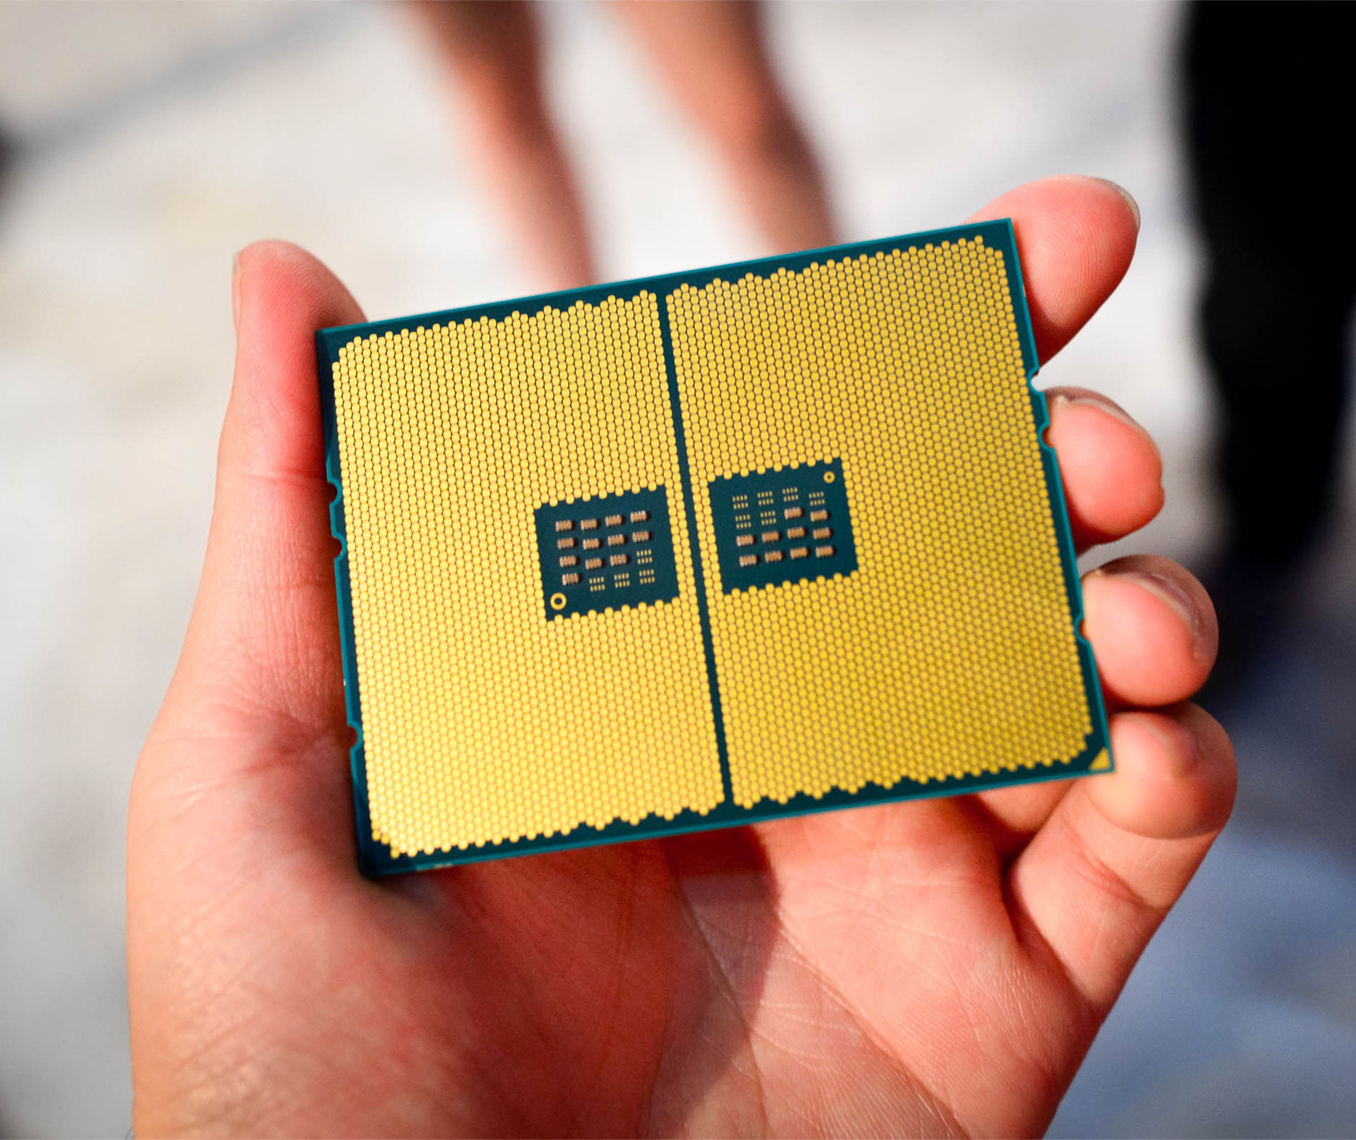 Intel Cascade Lake-X Core i9 processors to start at US$590; 18